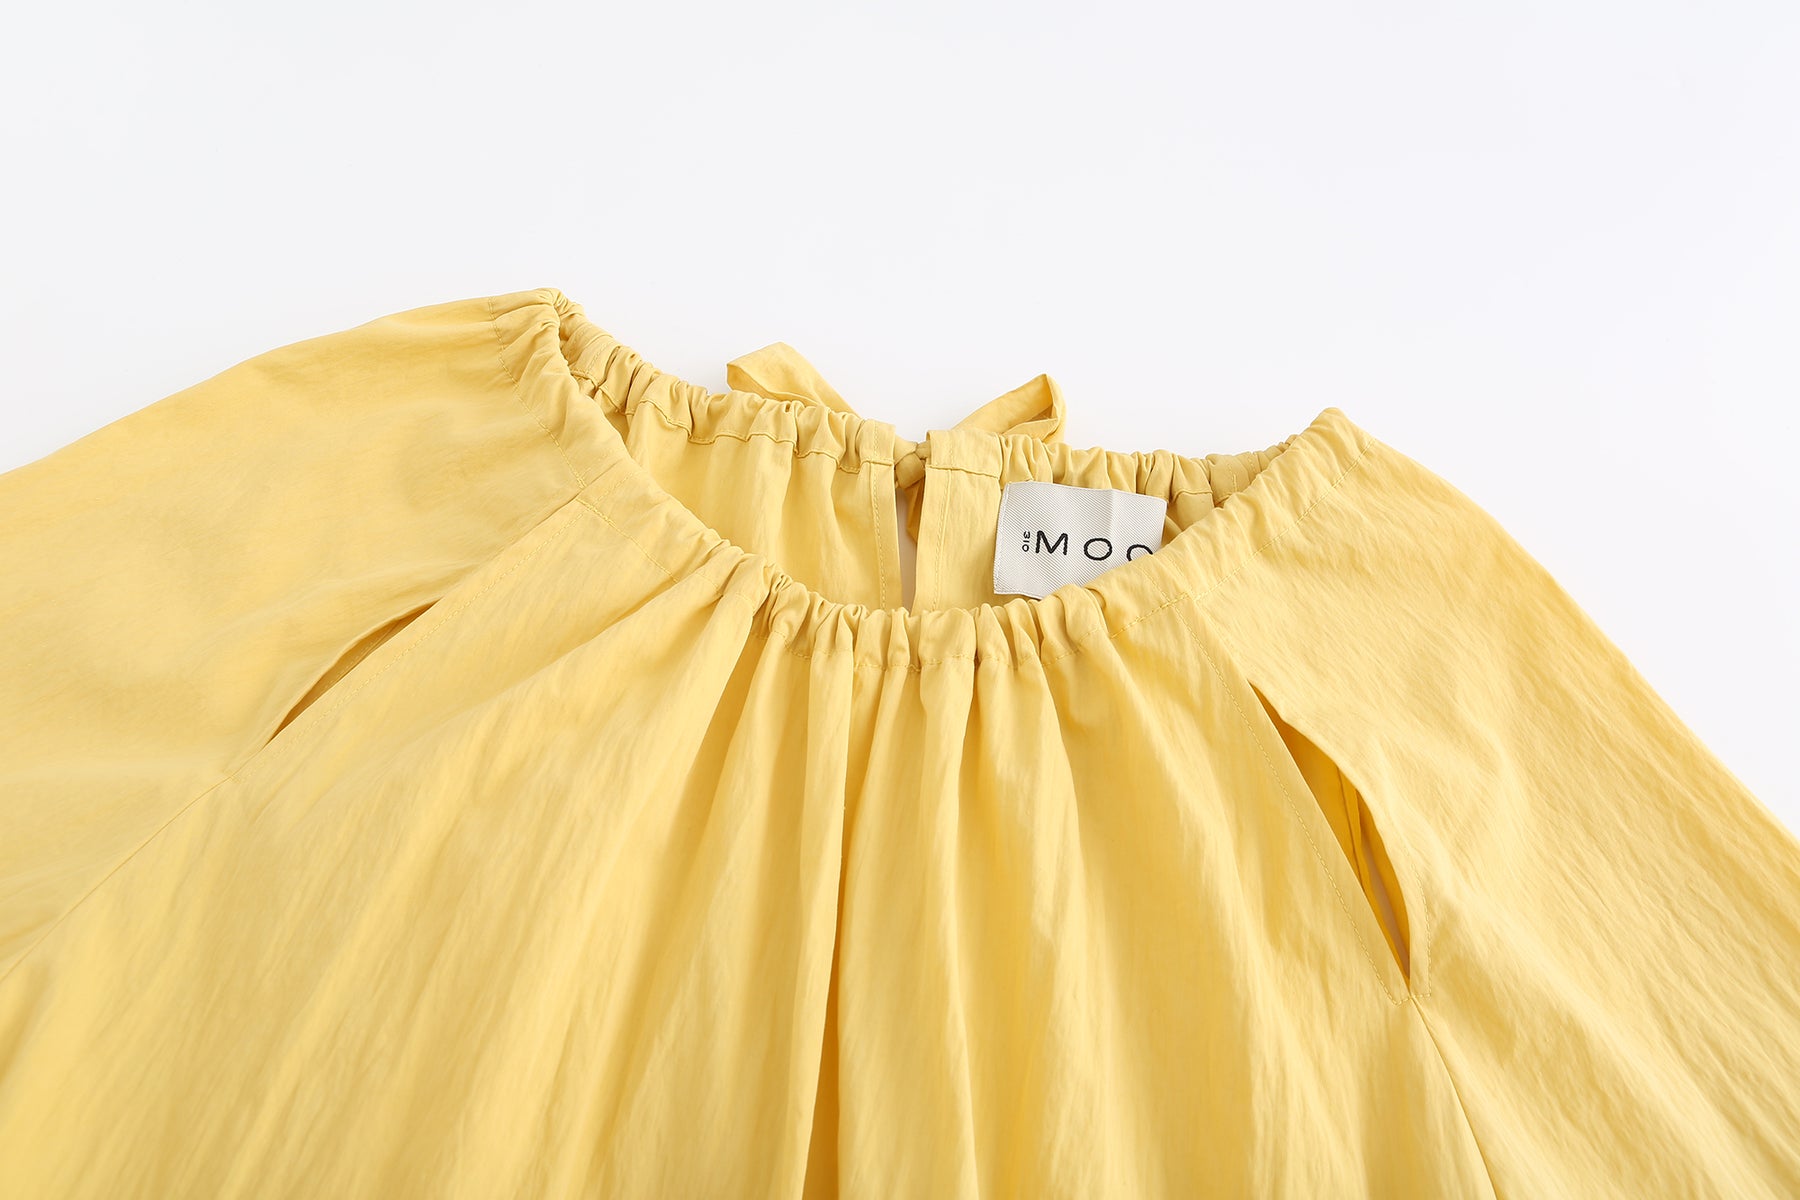 Cut out Dress - Yellow